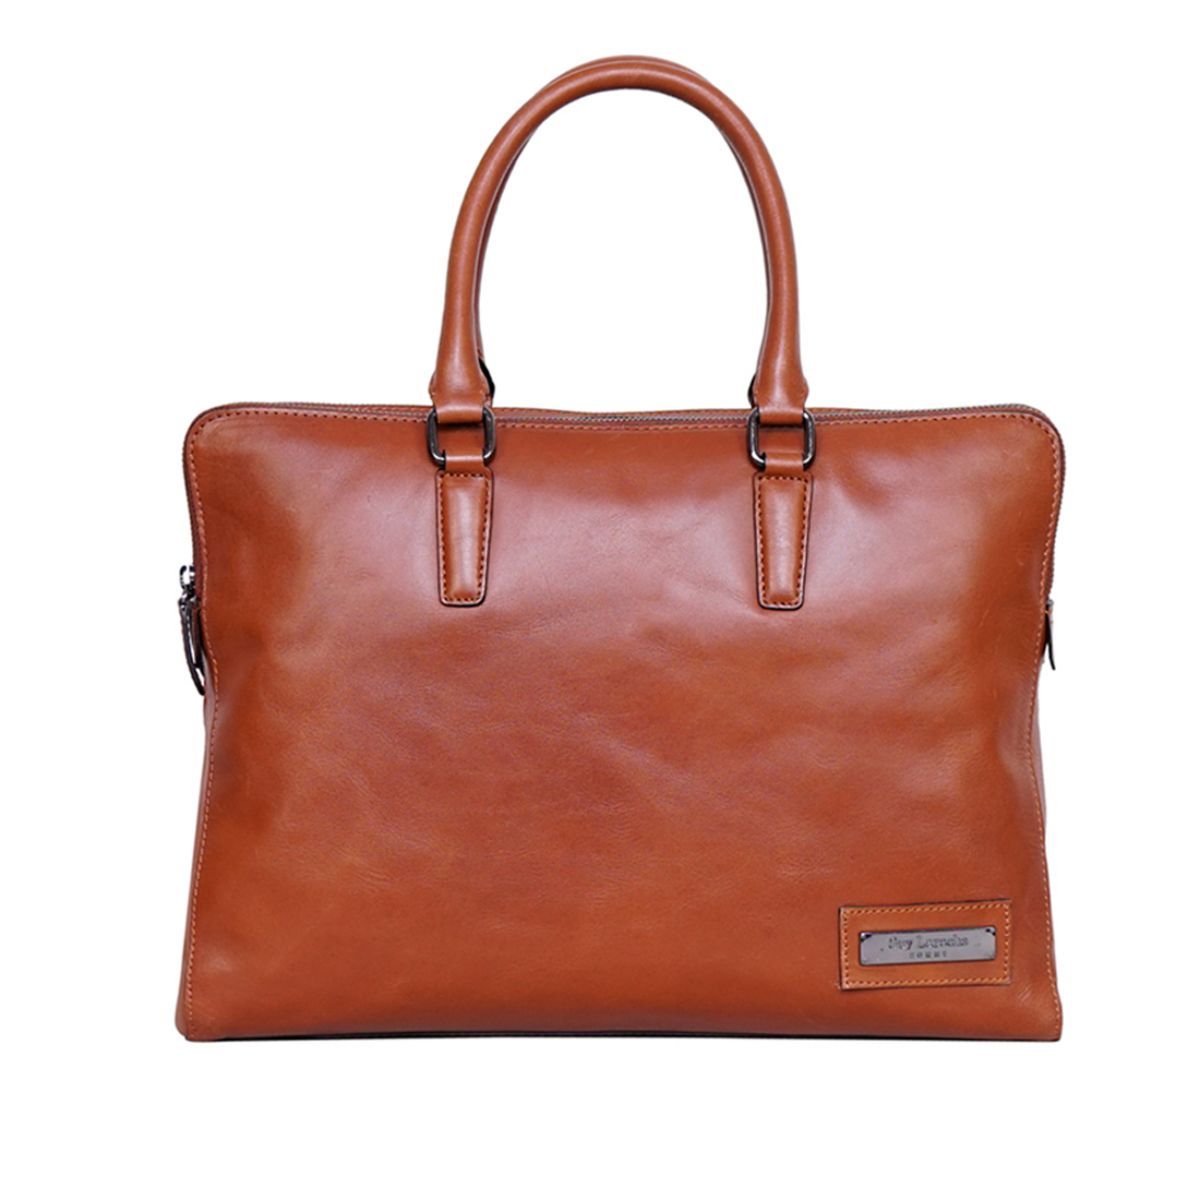 Justanned Guy Laroche Men Classy Tan Leather Bag